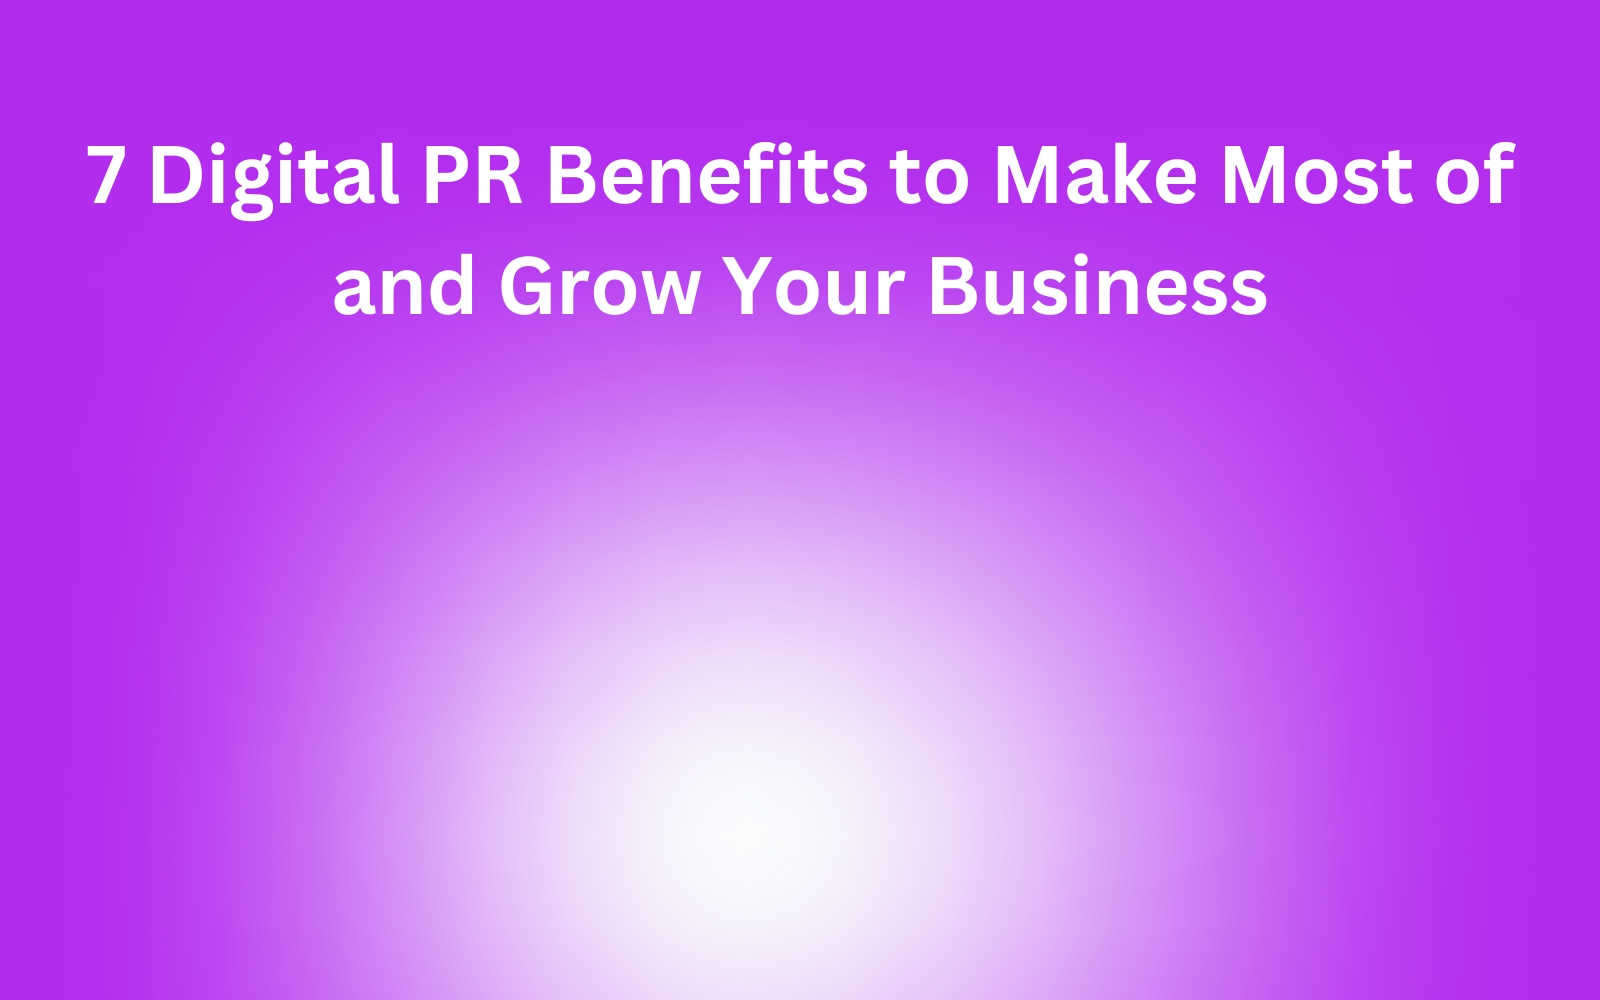 Digital PR Benefits